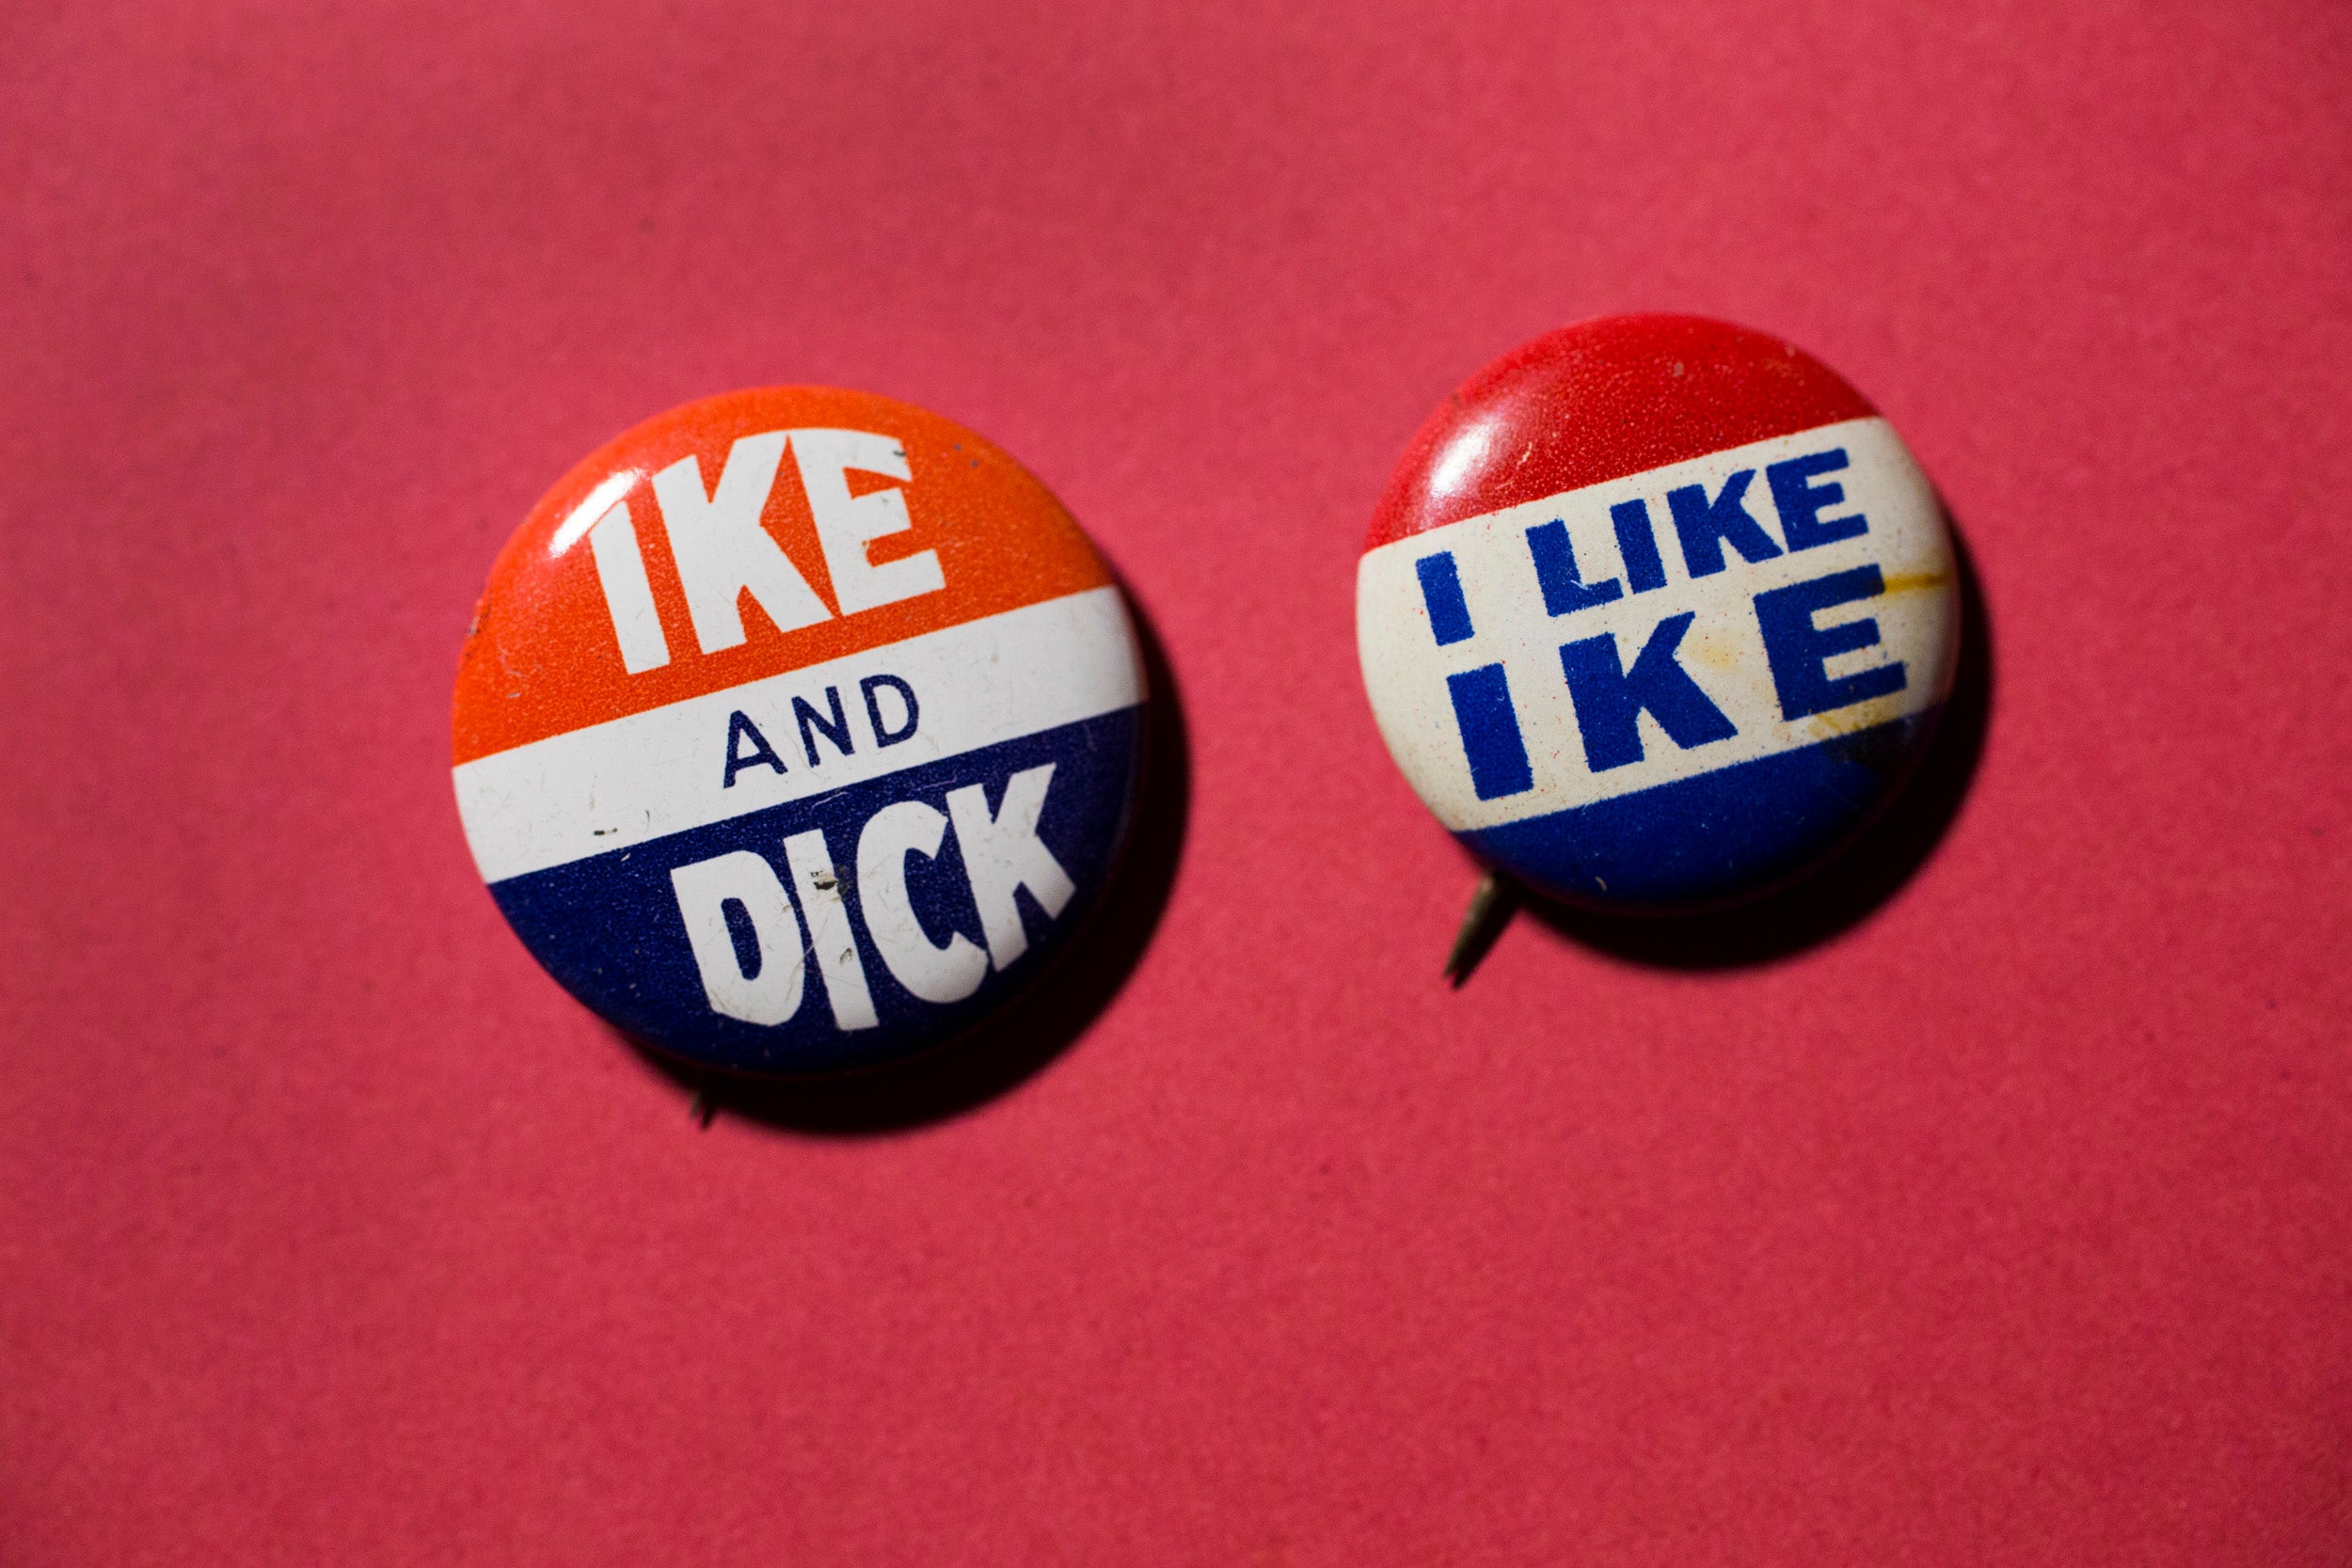 The famous “I like Ike” slogan spoke to Dwight D. Eisenhower’s popularity and trustworthiness.